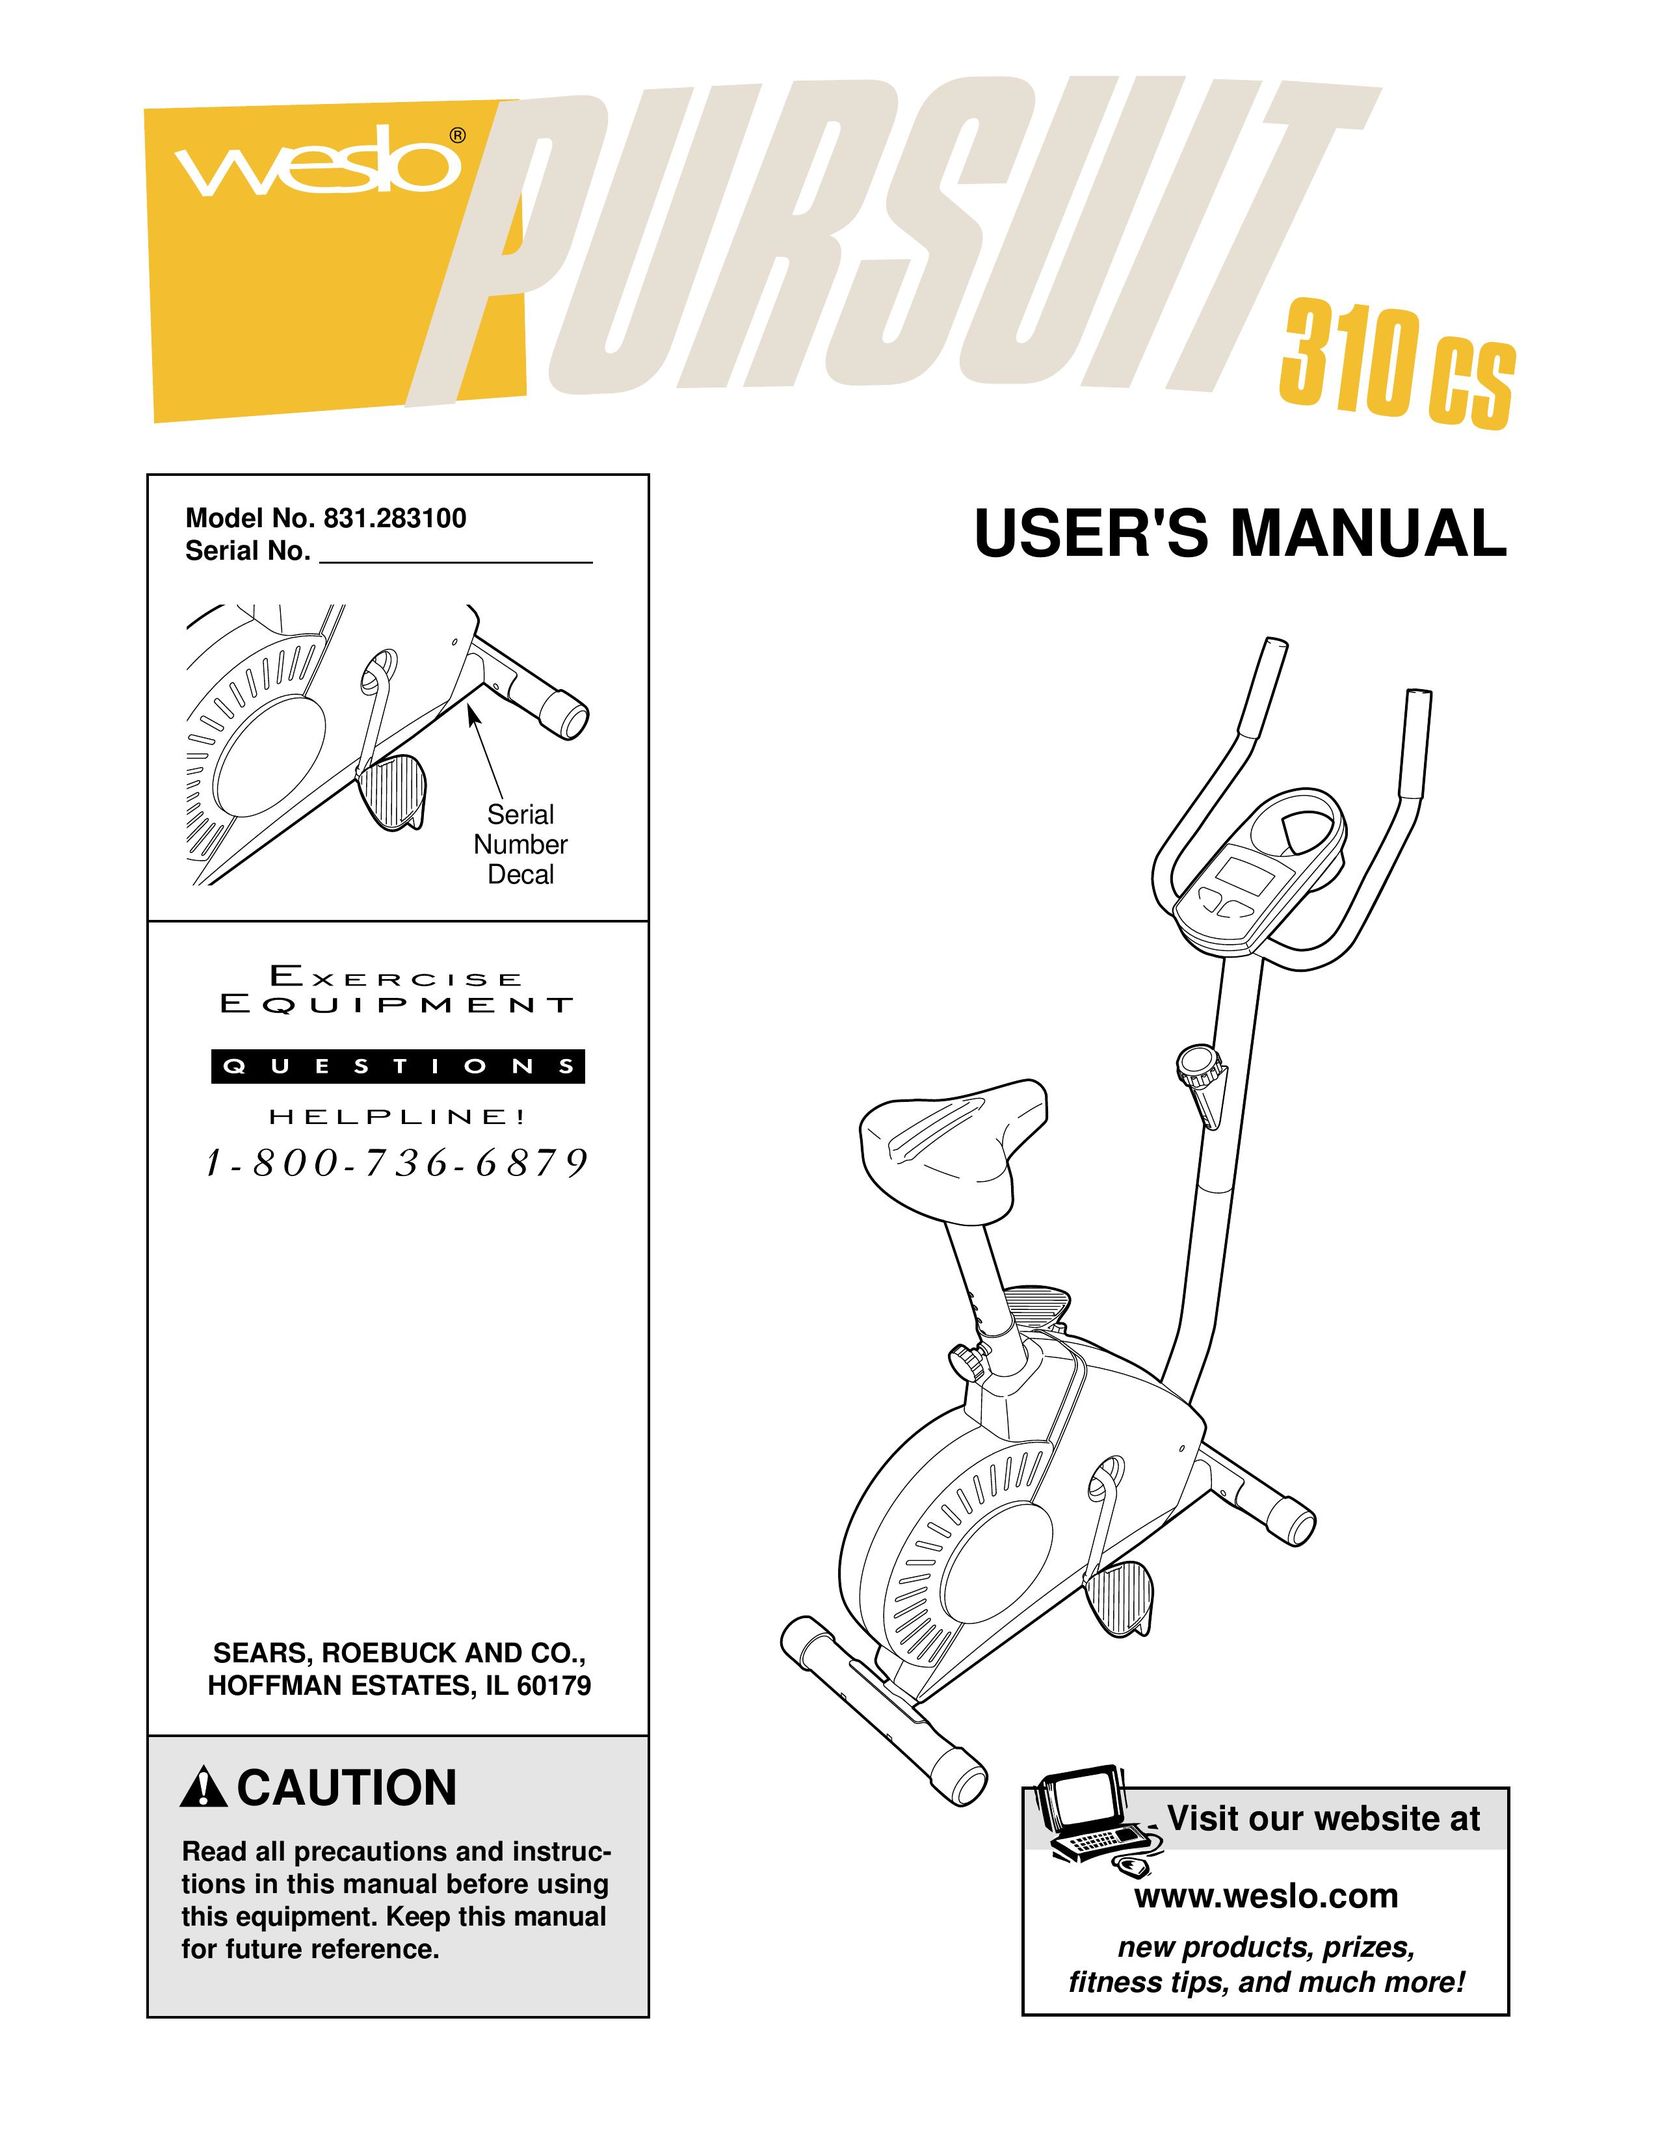 Weslo 310 CS Home Gym User Manual